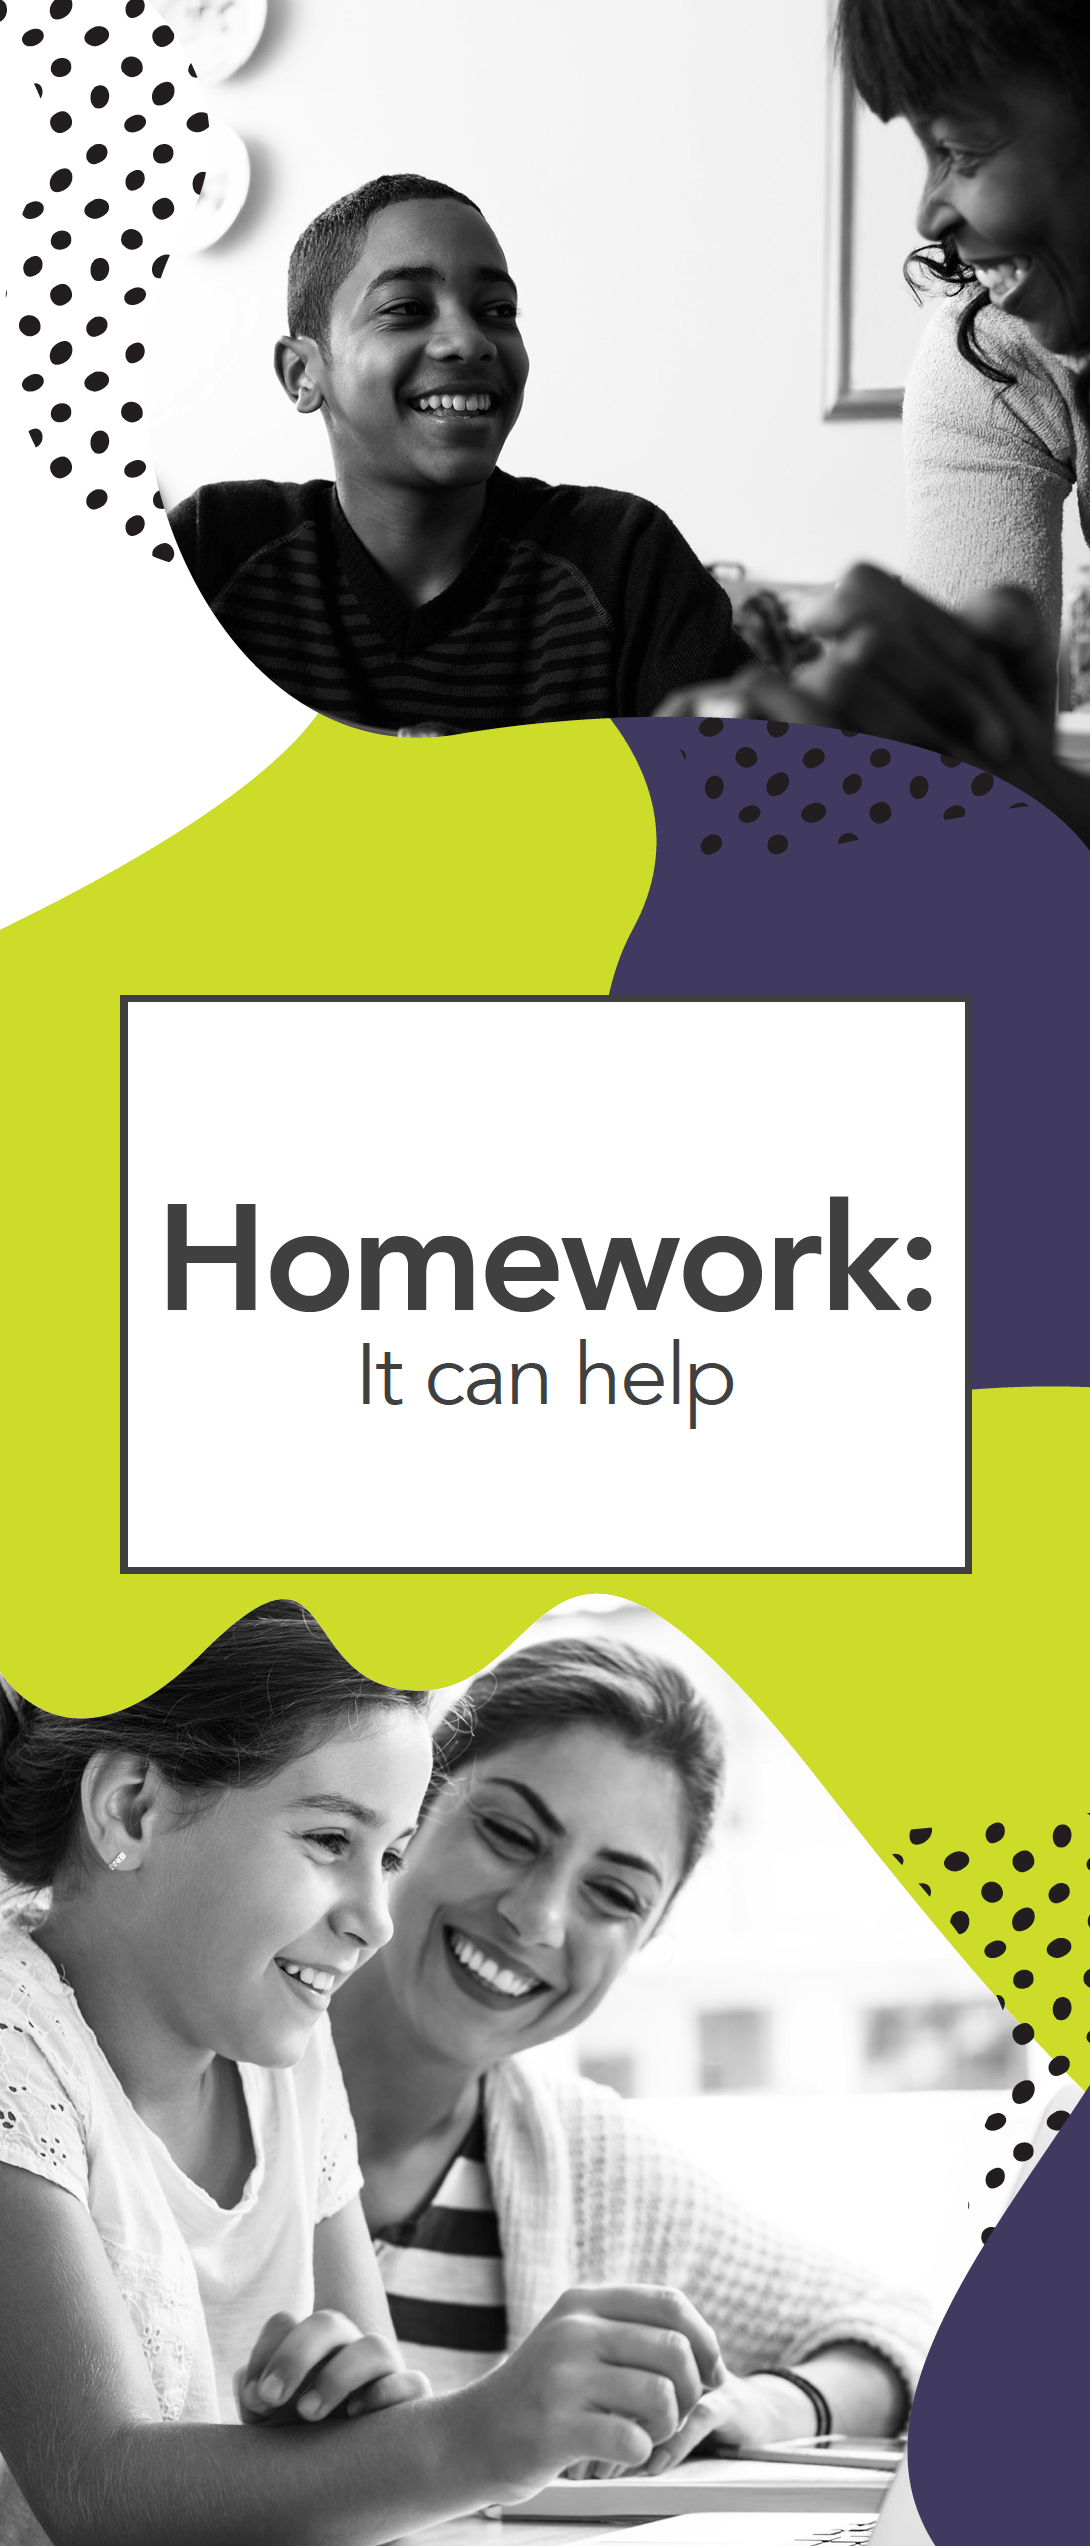 Homework help order form